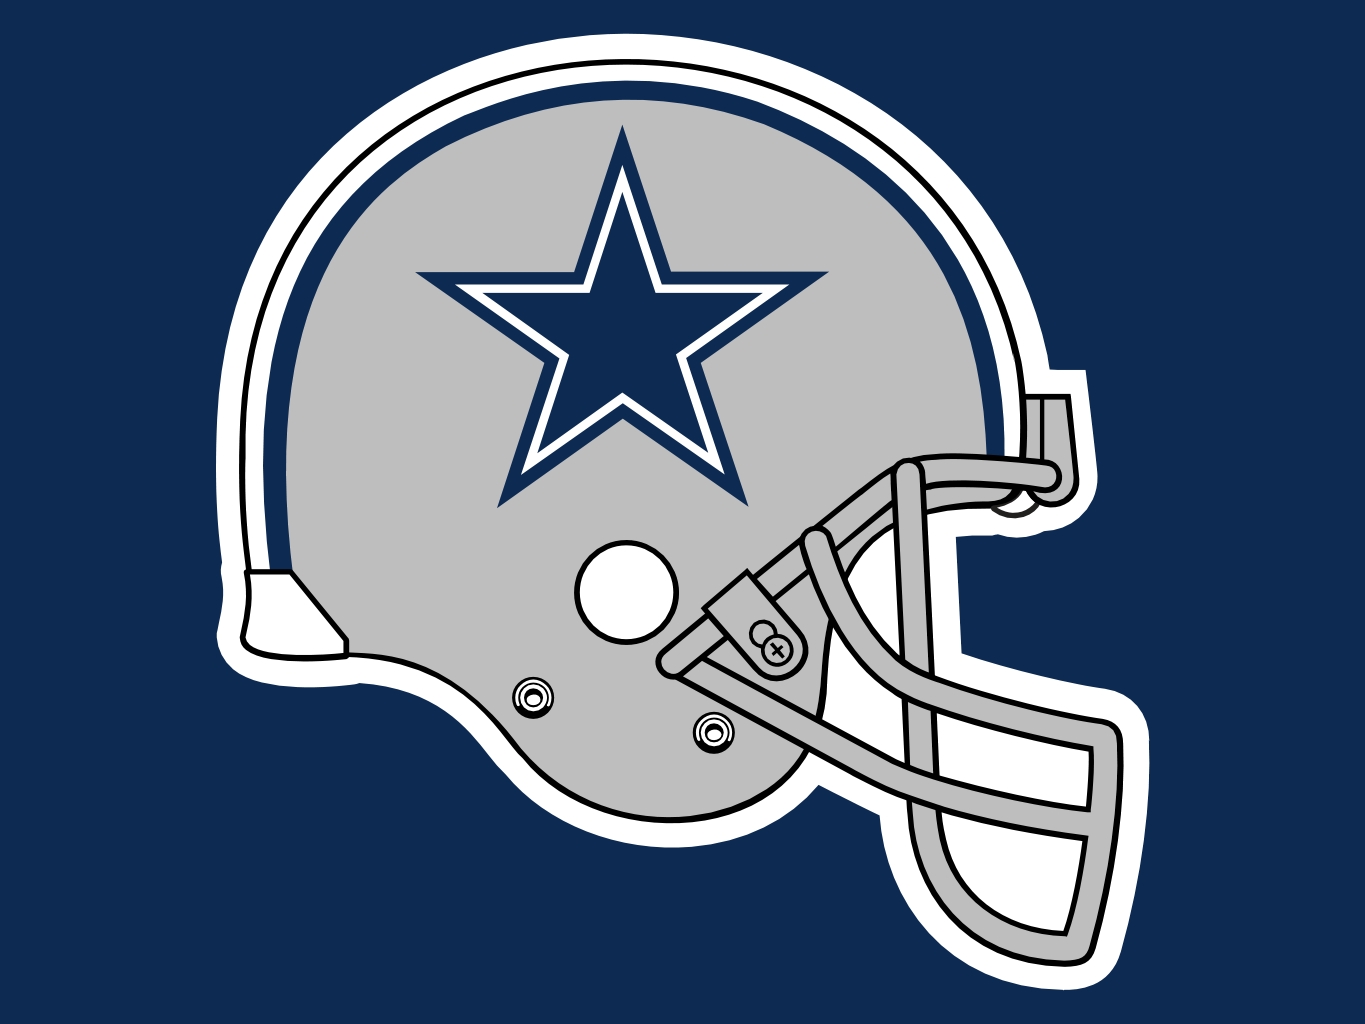 Dallas Cowboys Helmet Logo drawing free image download